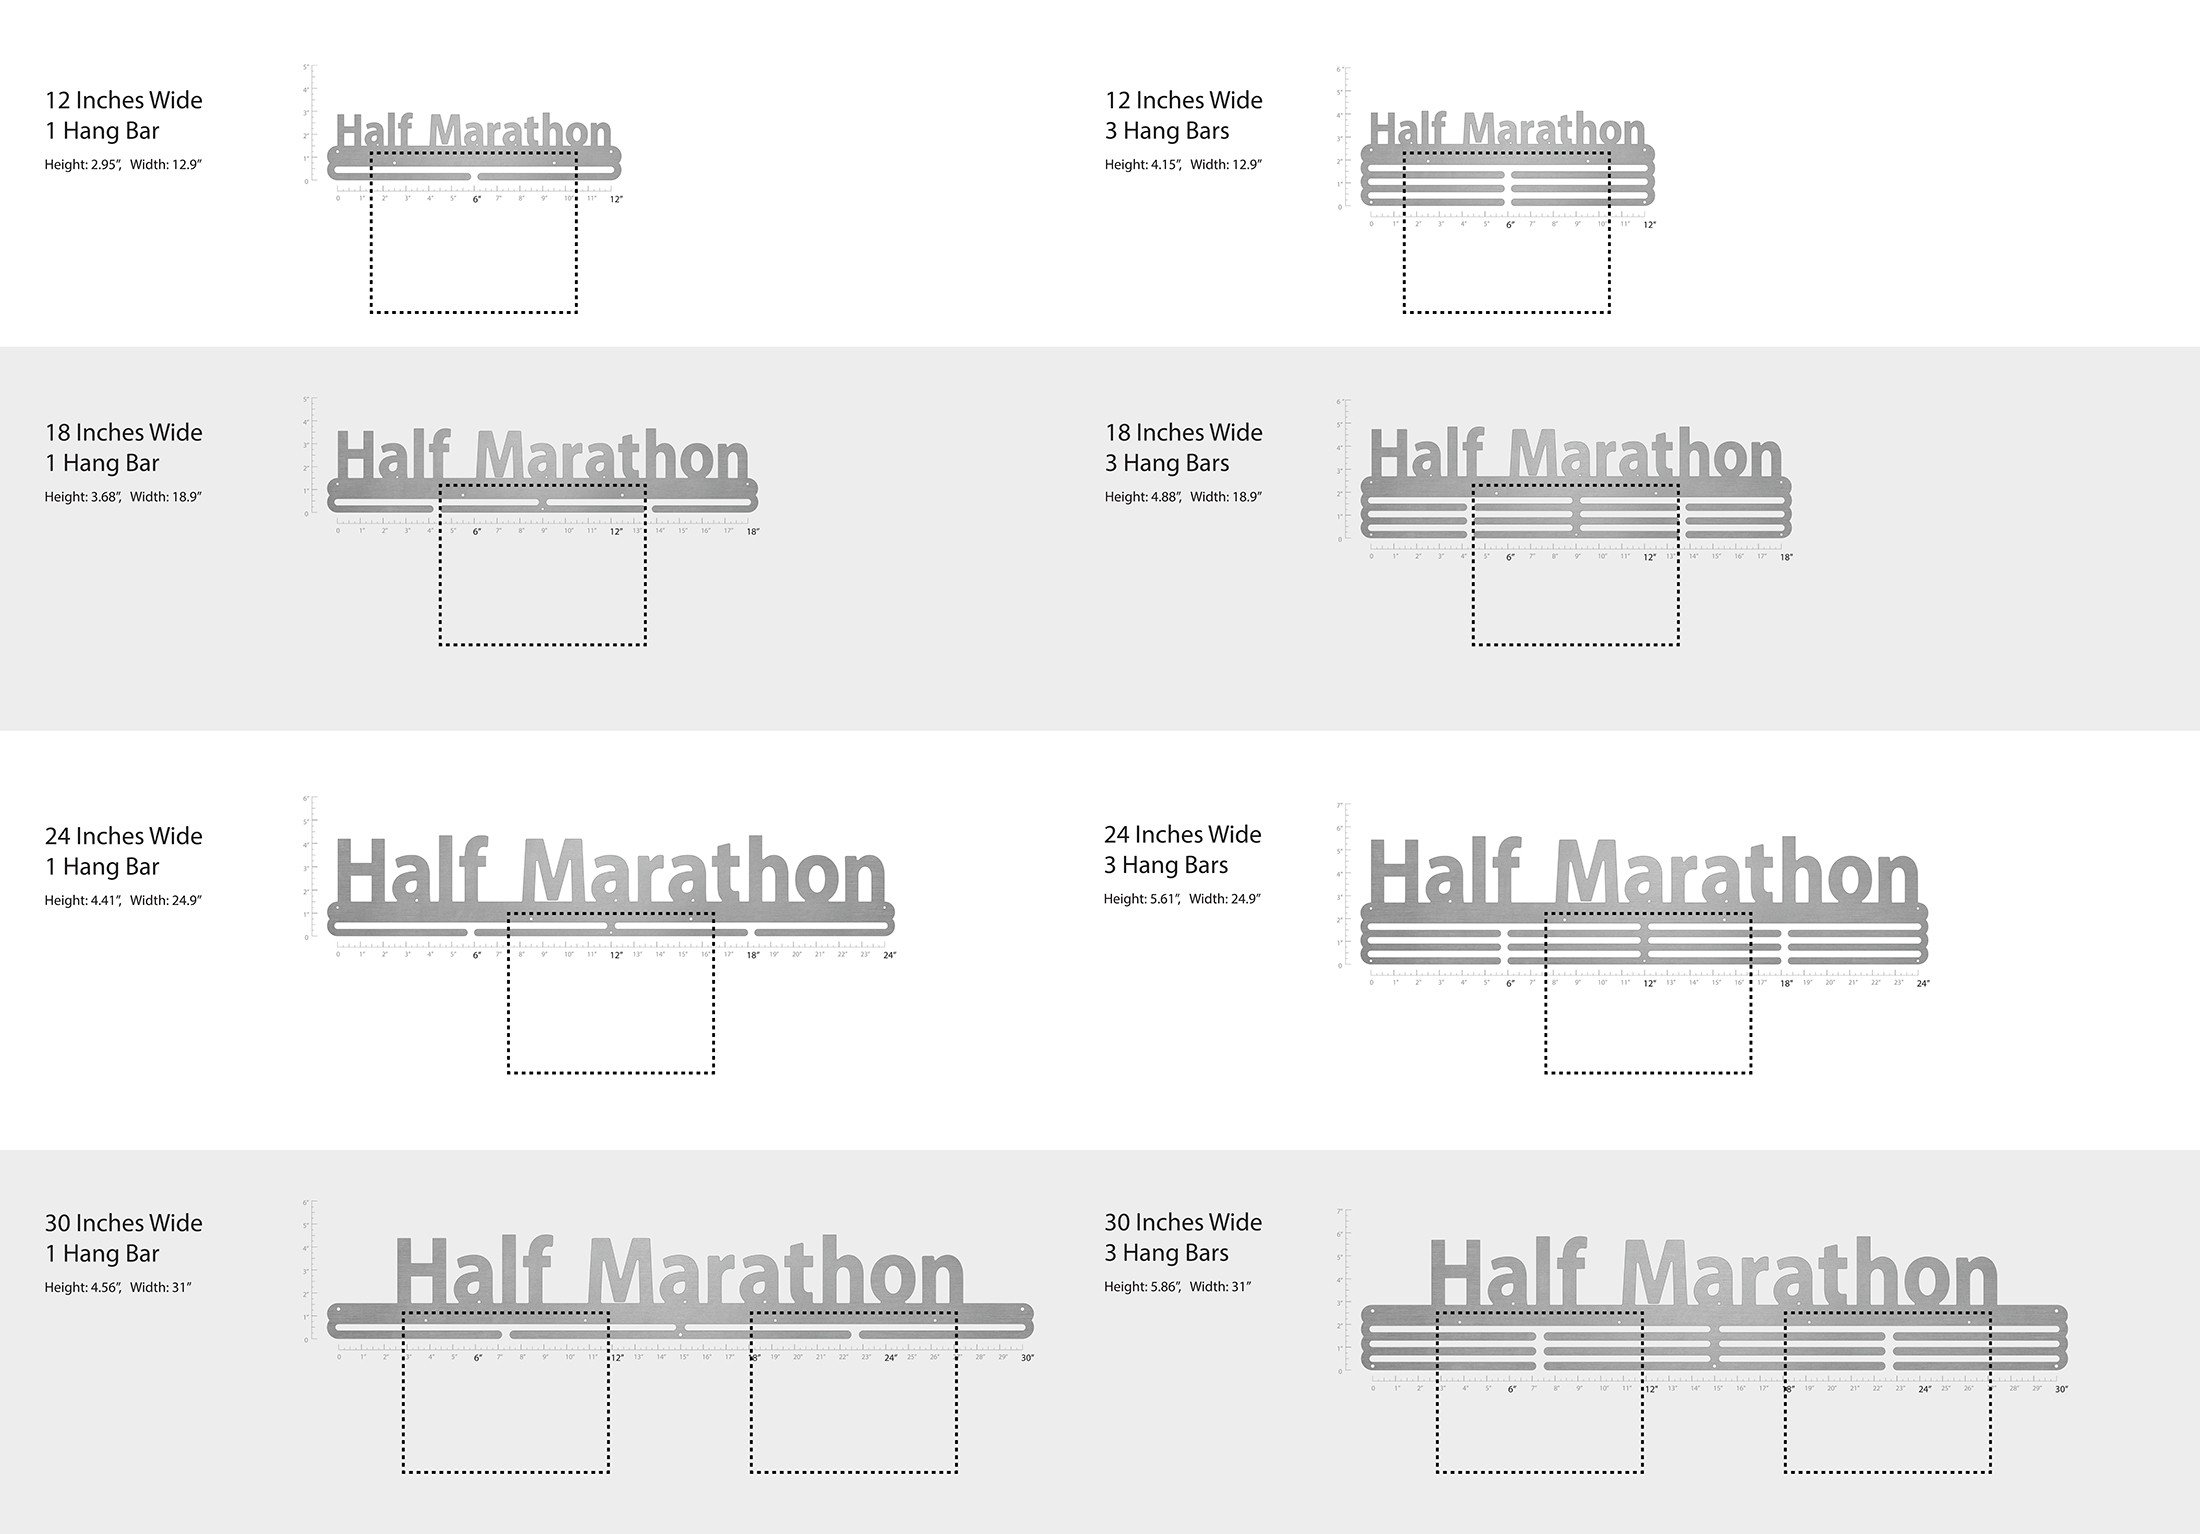 Half Marathon Bib and Medal Display